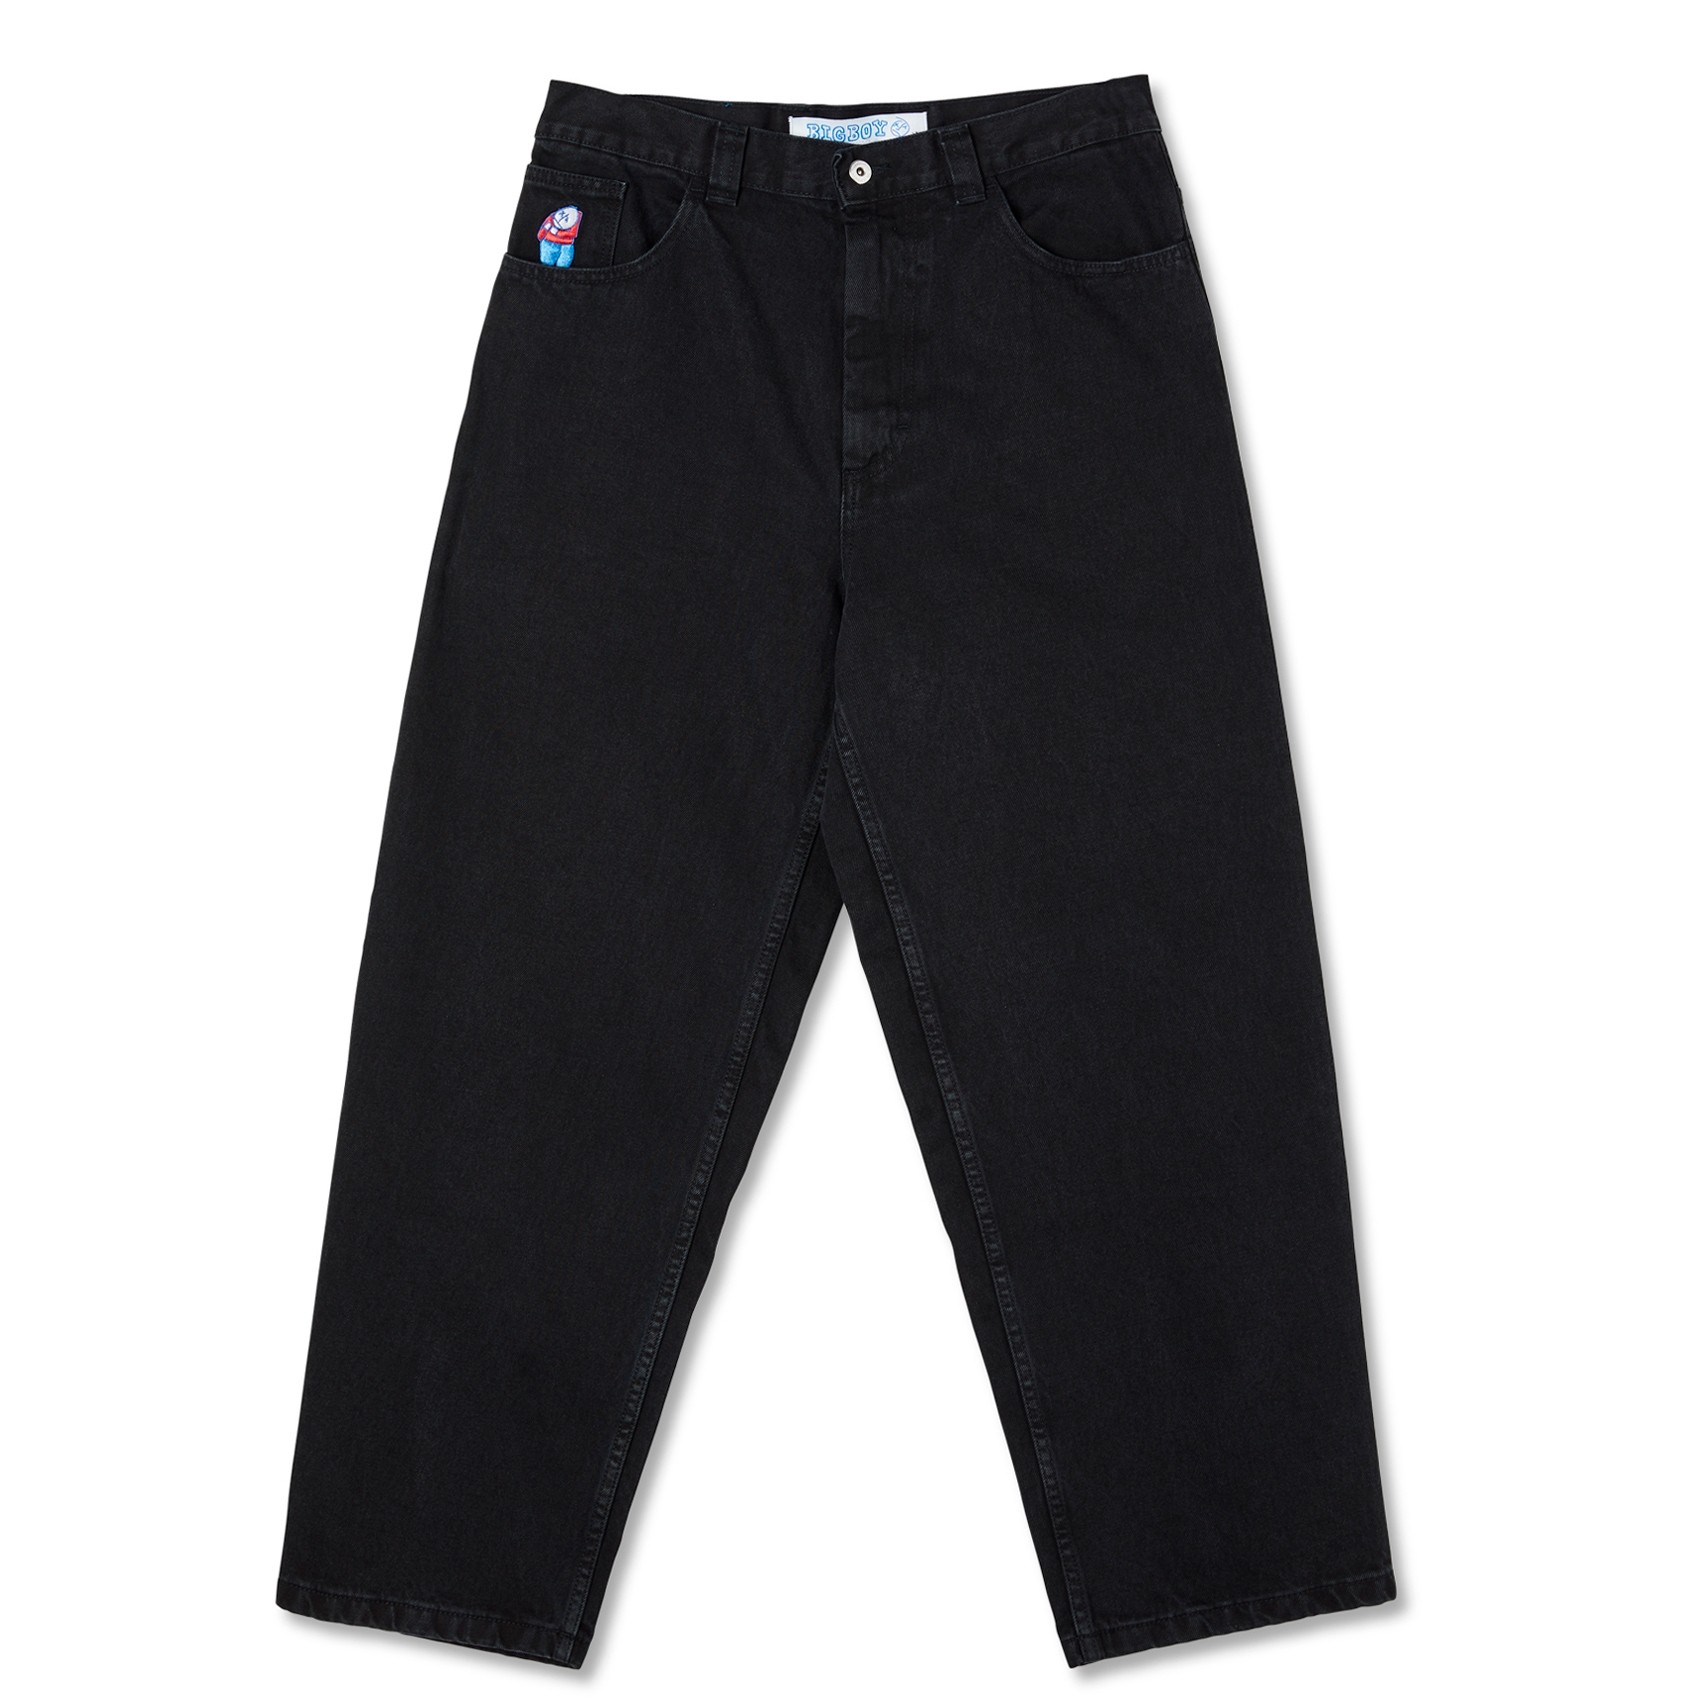 Polar Skate Co. Big Boy Denim Jeans (Pitch Black) - PSC-F20-BIGBOYJEANS